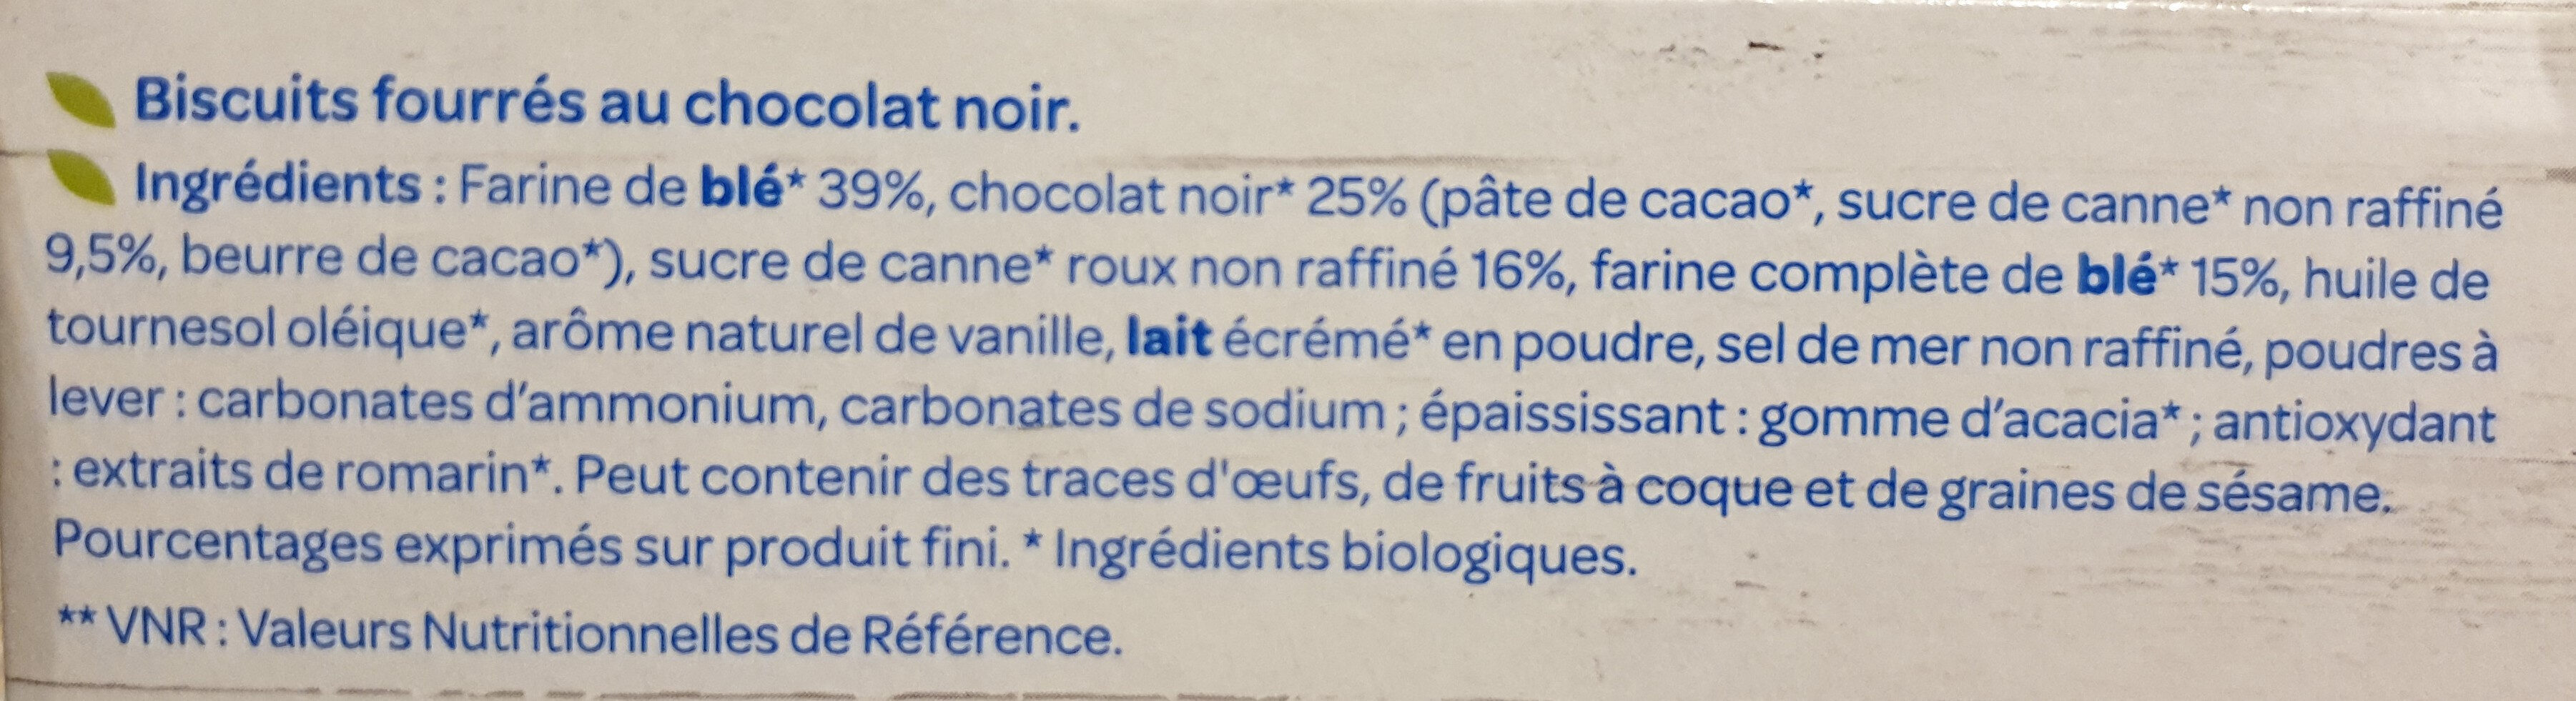 Fourrés Chocolat noir BIO - Ingredientes - fr